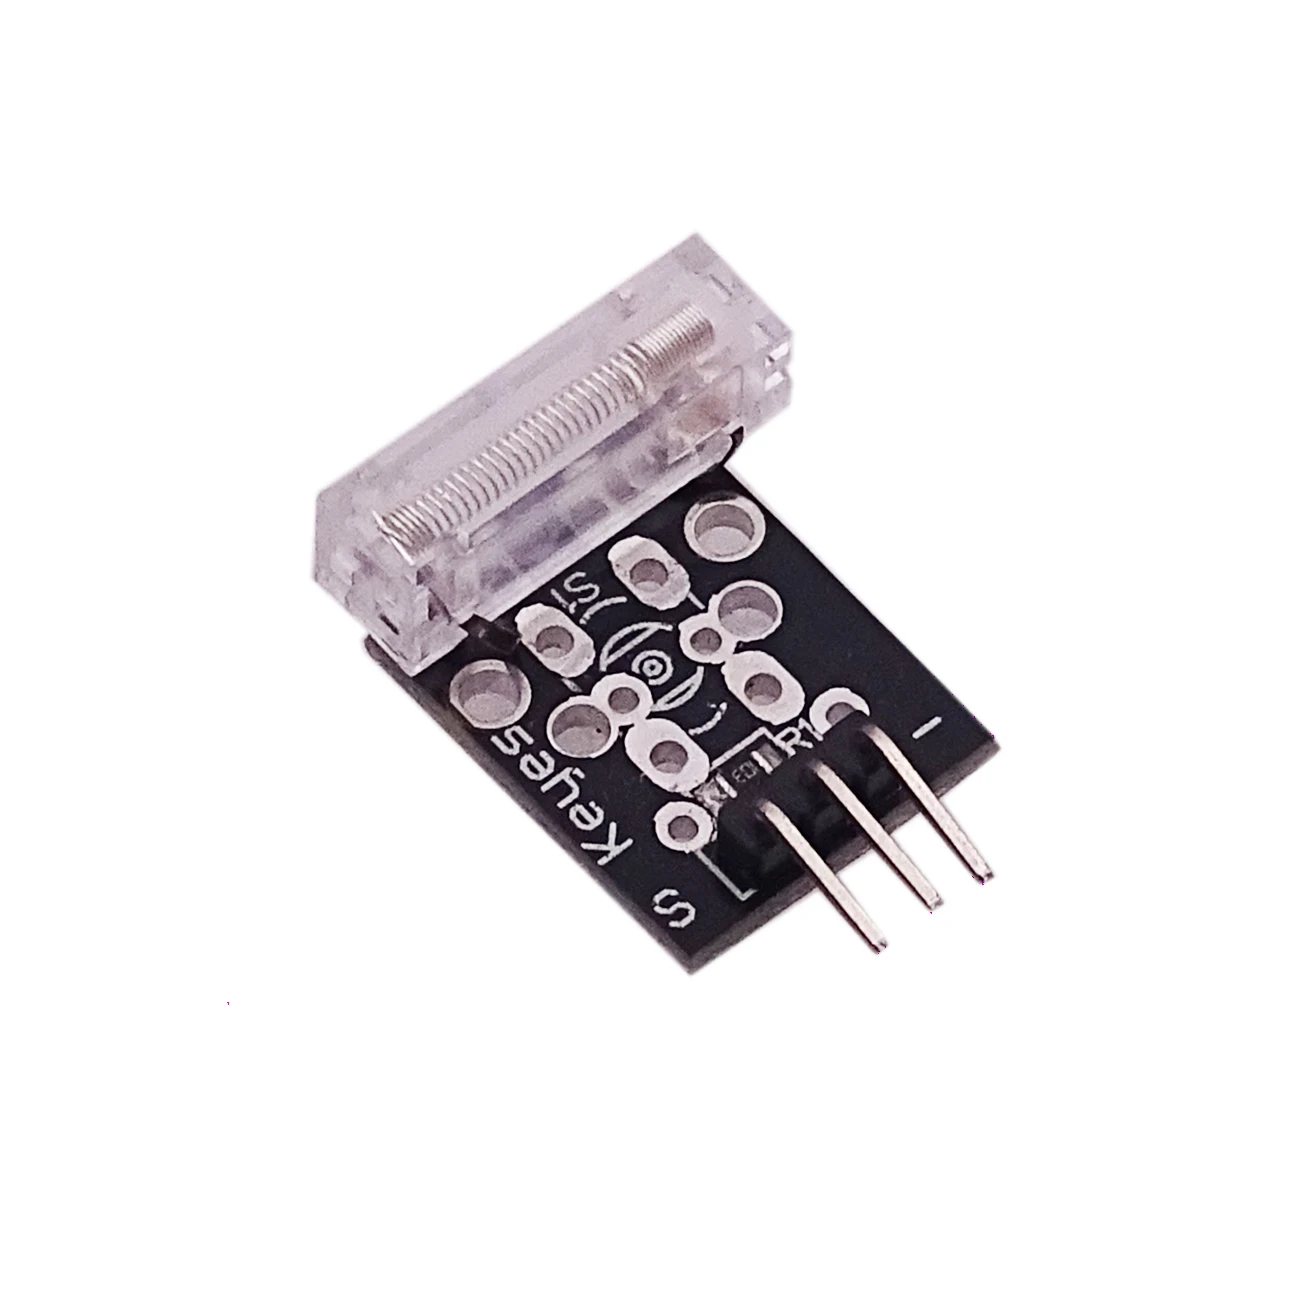 2PCS Knock Sensor Module with LED KY-031 For Arduino PIC AVR Raspberry 